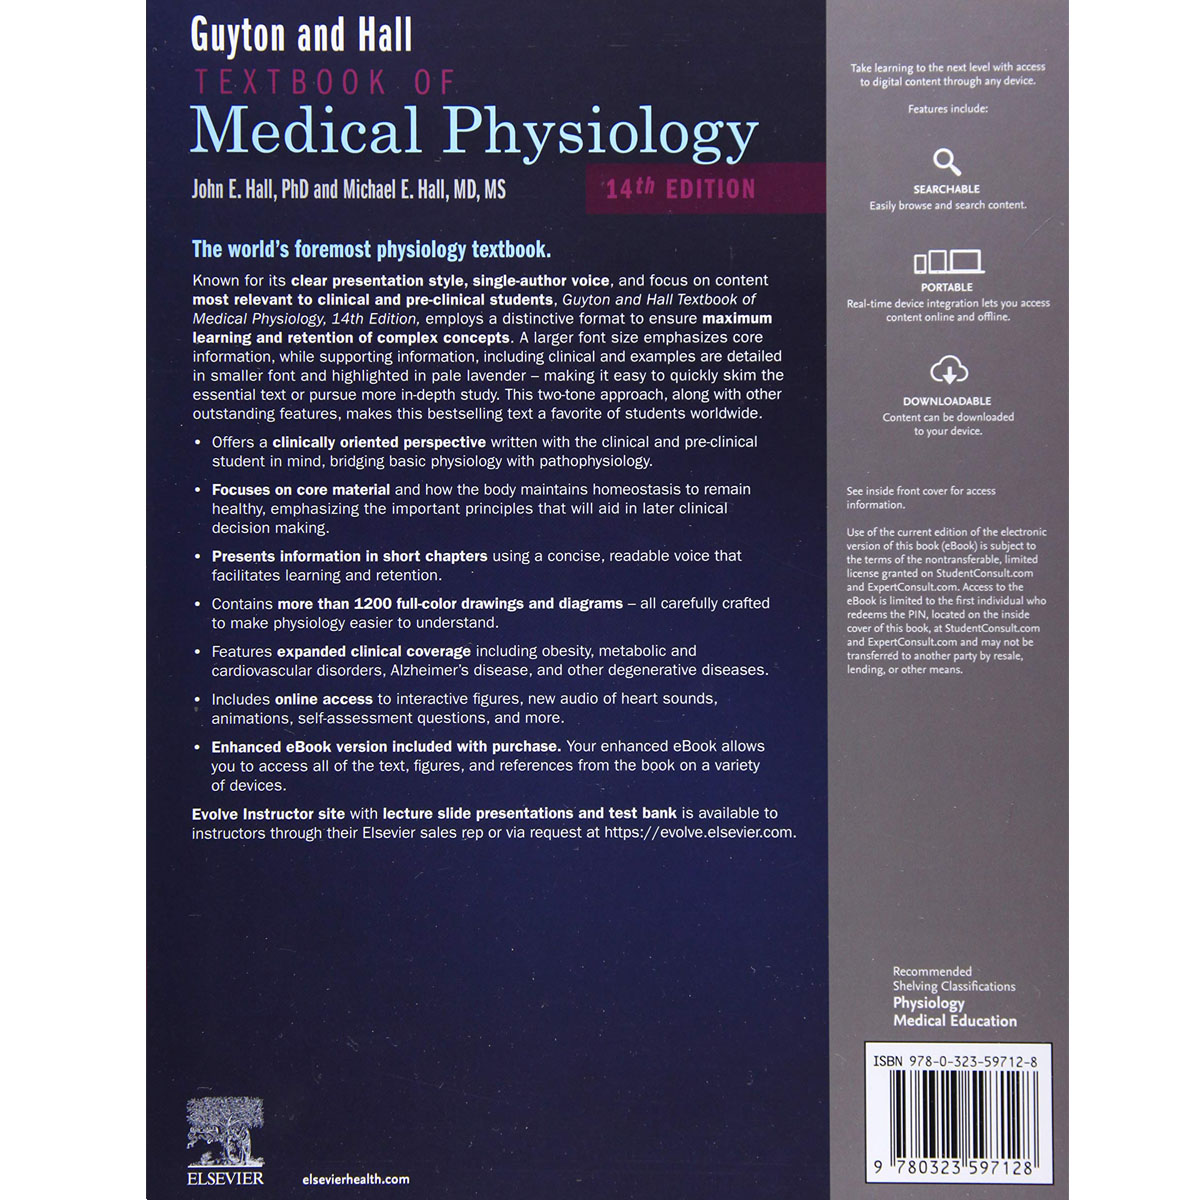 picture کتاب Guyton and hall textbook of medical physiology اثرjohn E.hall michael E.hall انتشارات الزویر